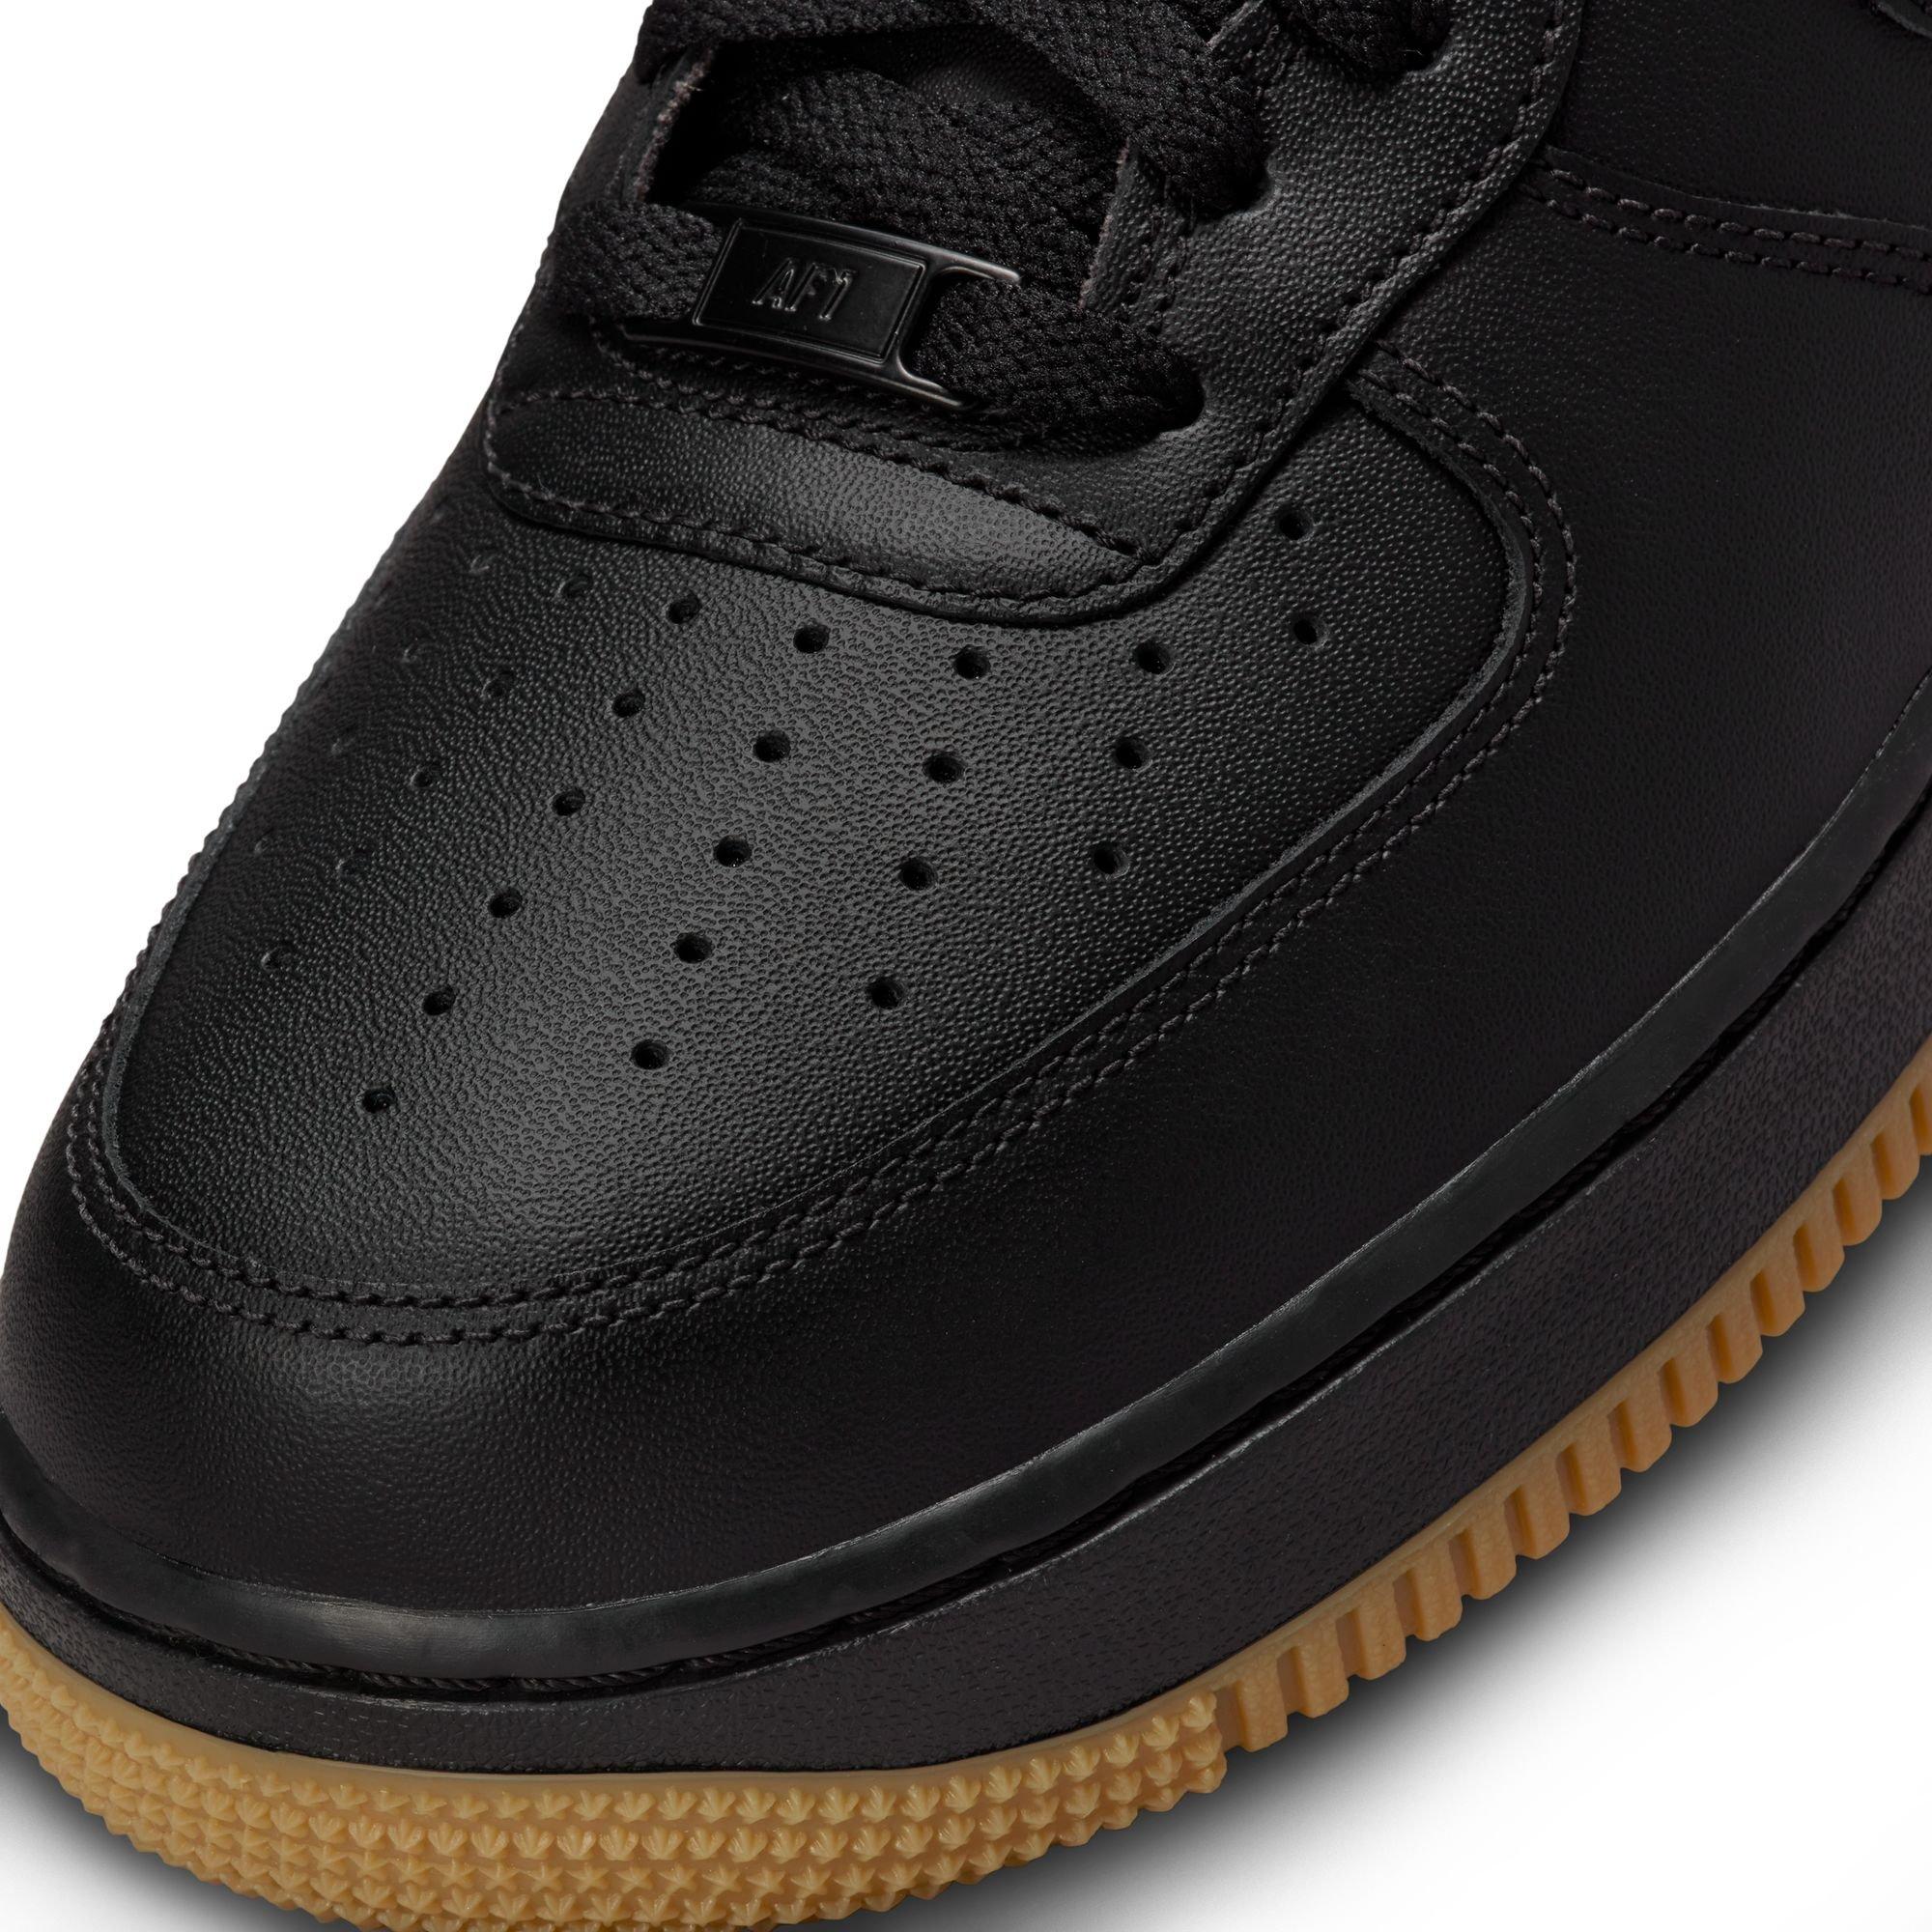  Nike Men's Air Force 1 Low '07 shoe, Black/Gum Light  Brown/Black, 7